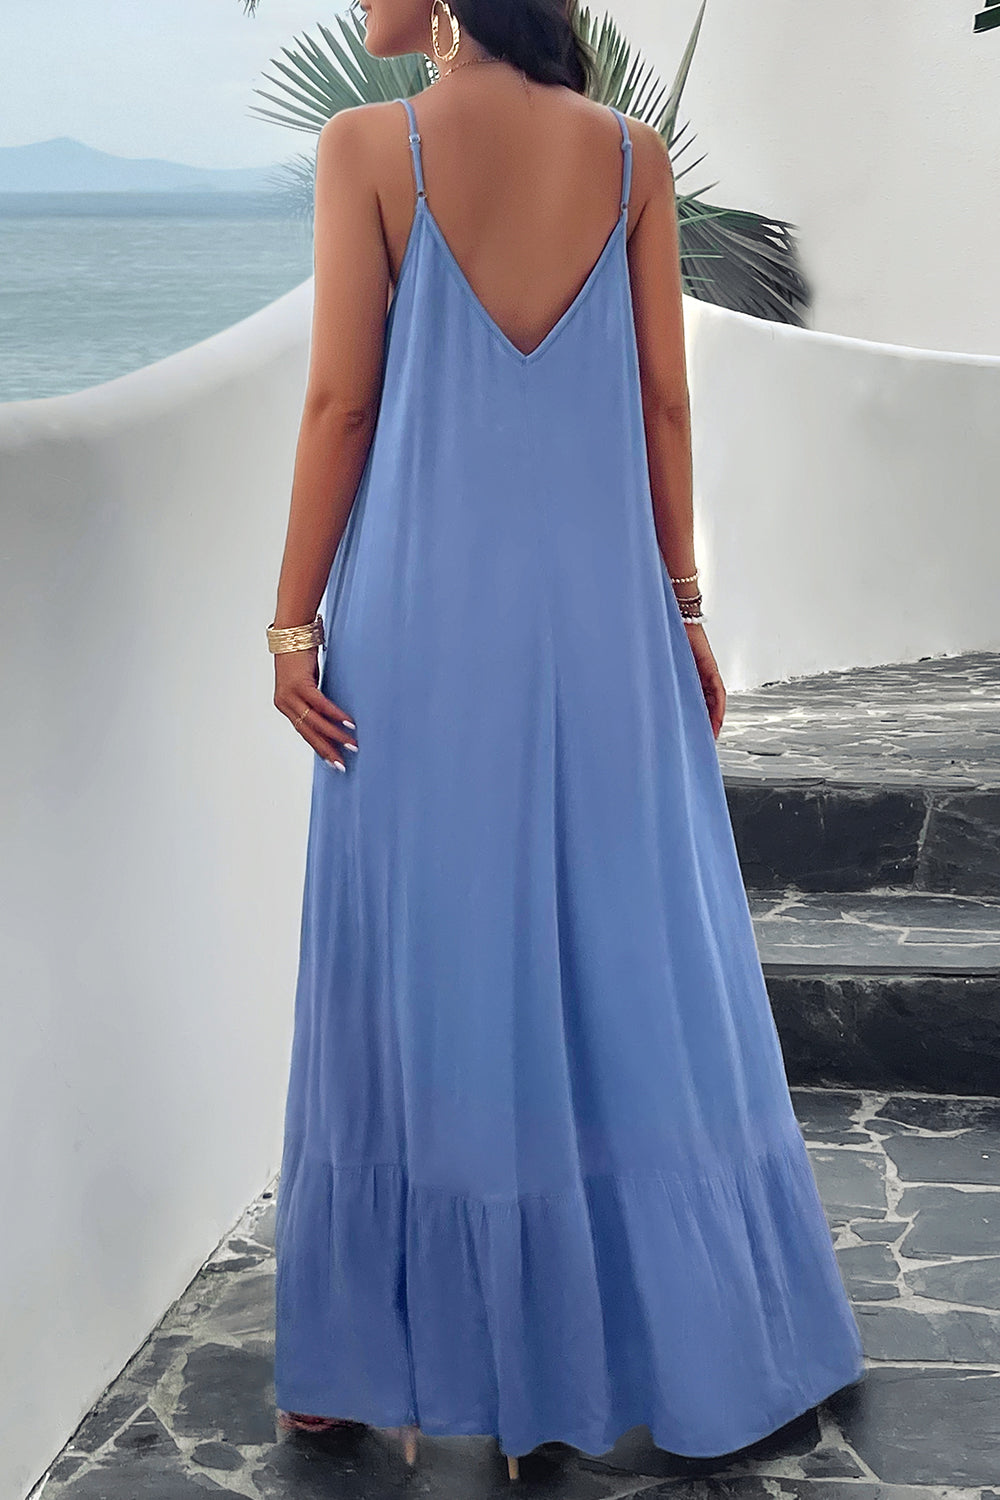 Back of model standing outside wearing blue spaghetti strap loungedress